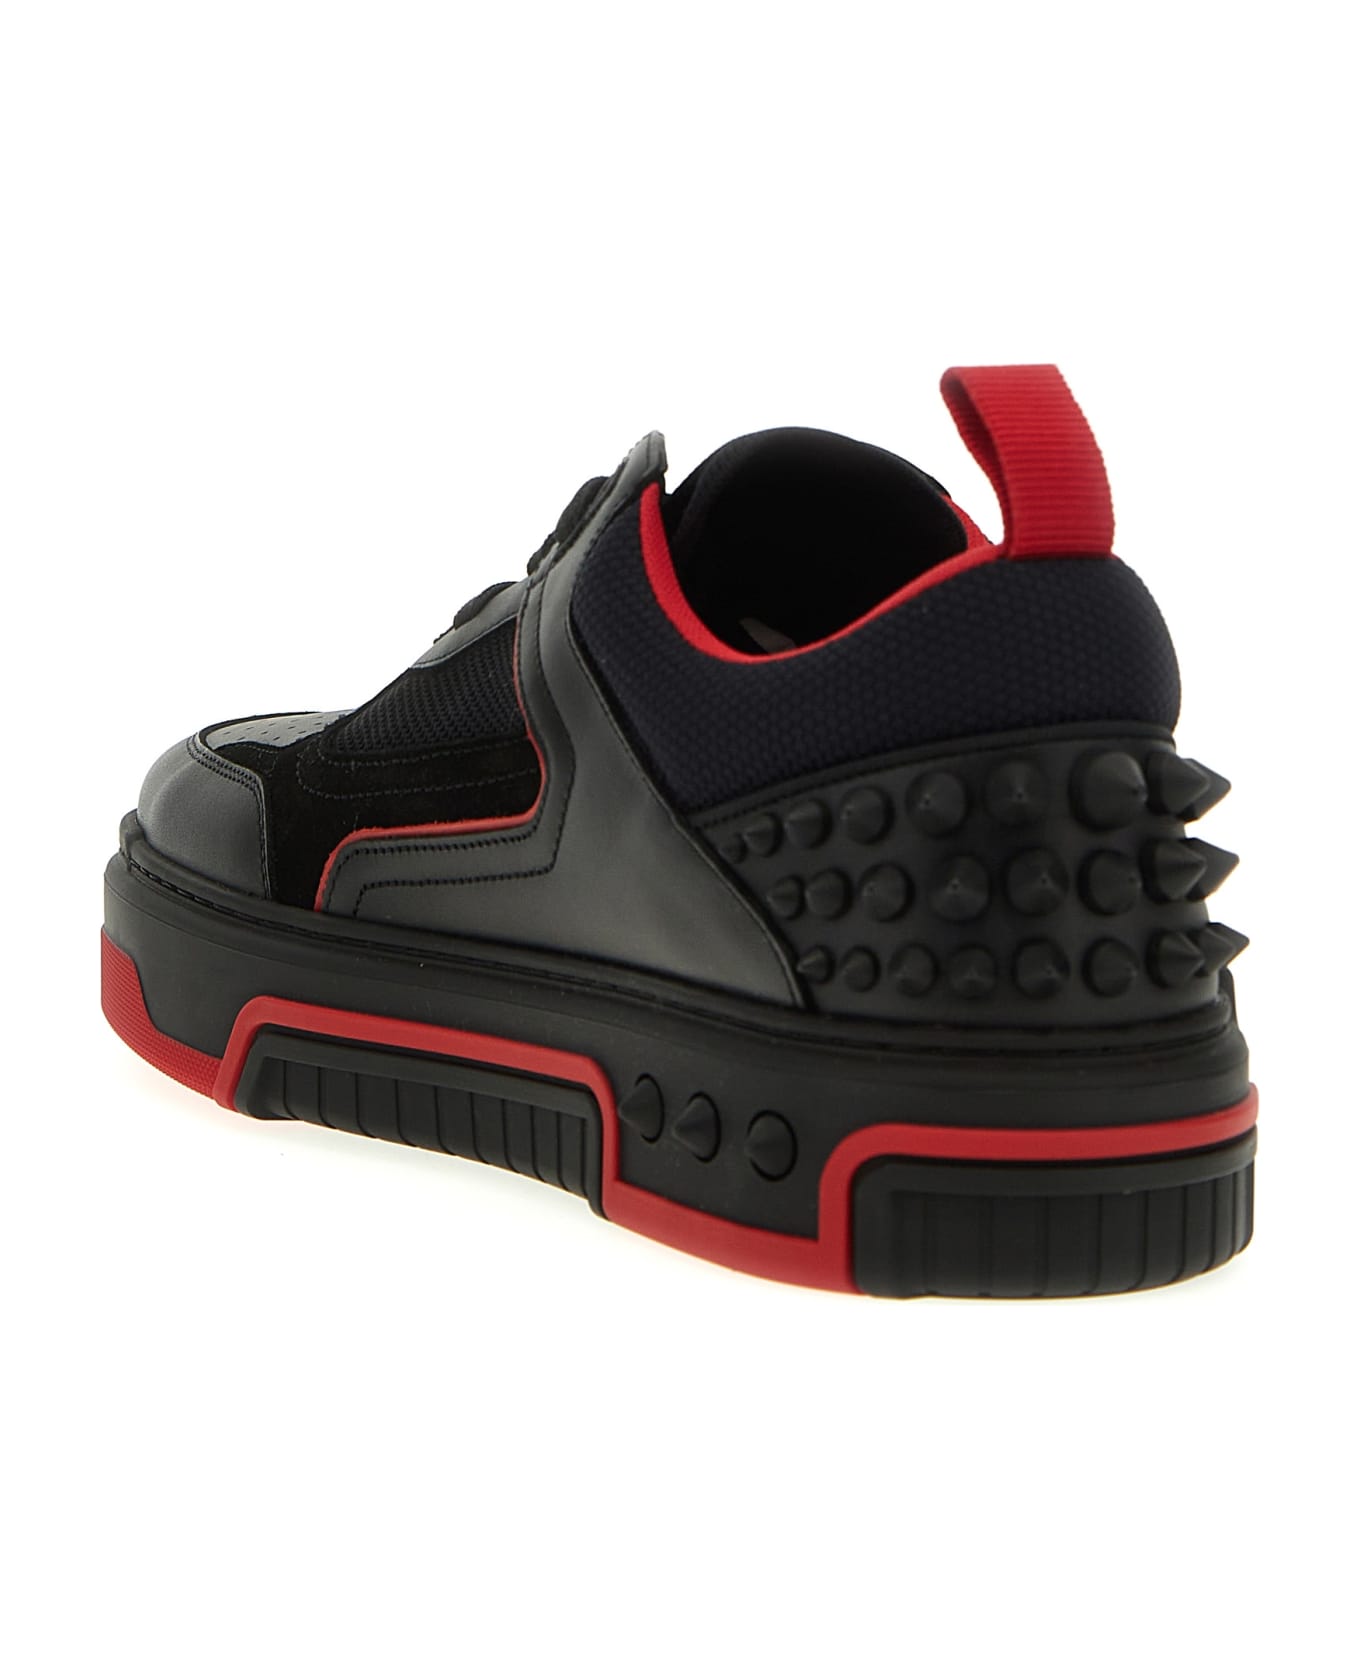 Christian Louboutin 'astroloubi' Sneakers - Black/loubi